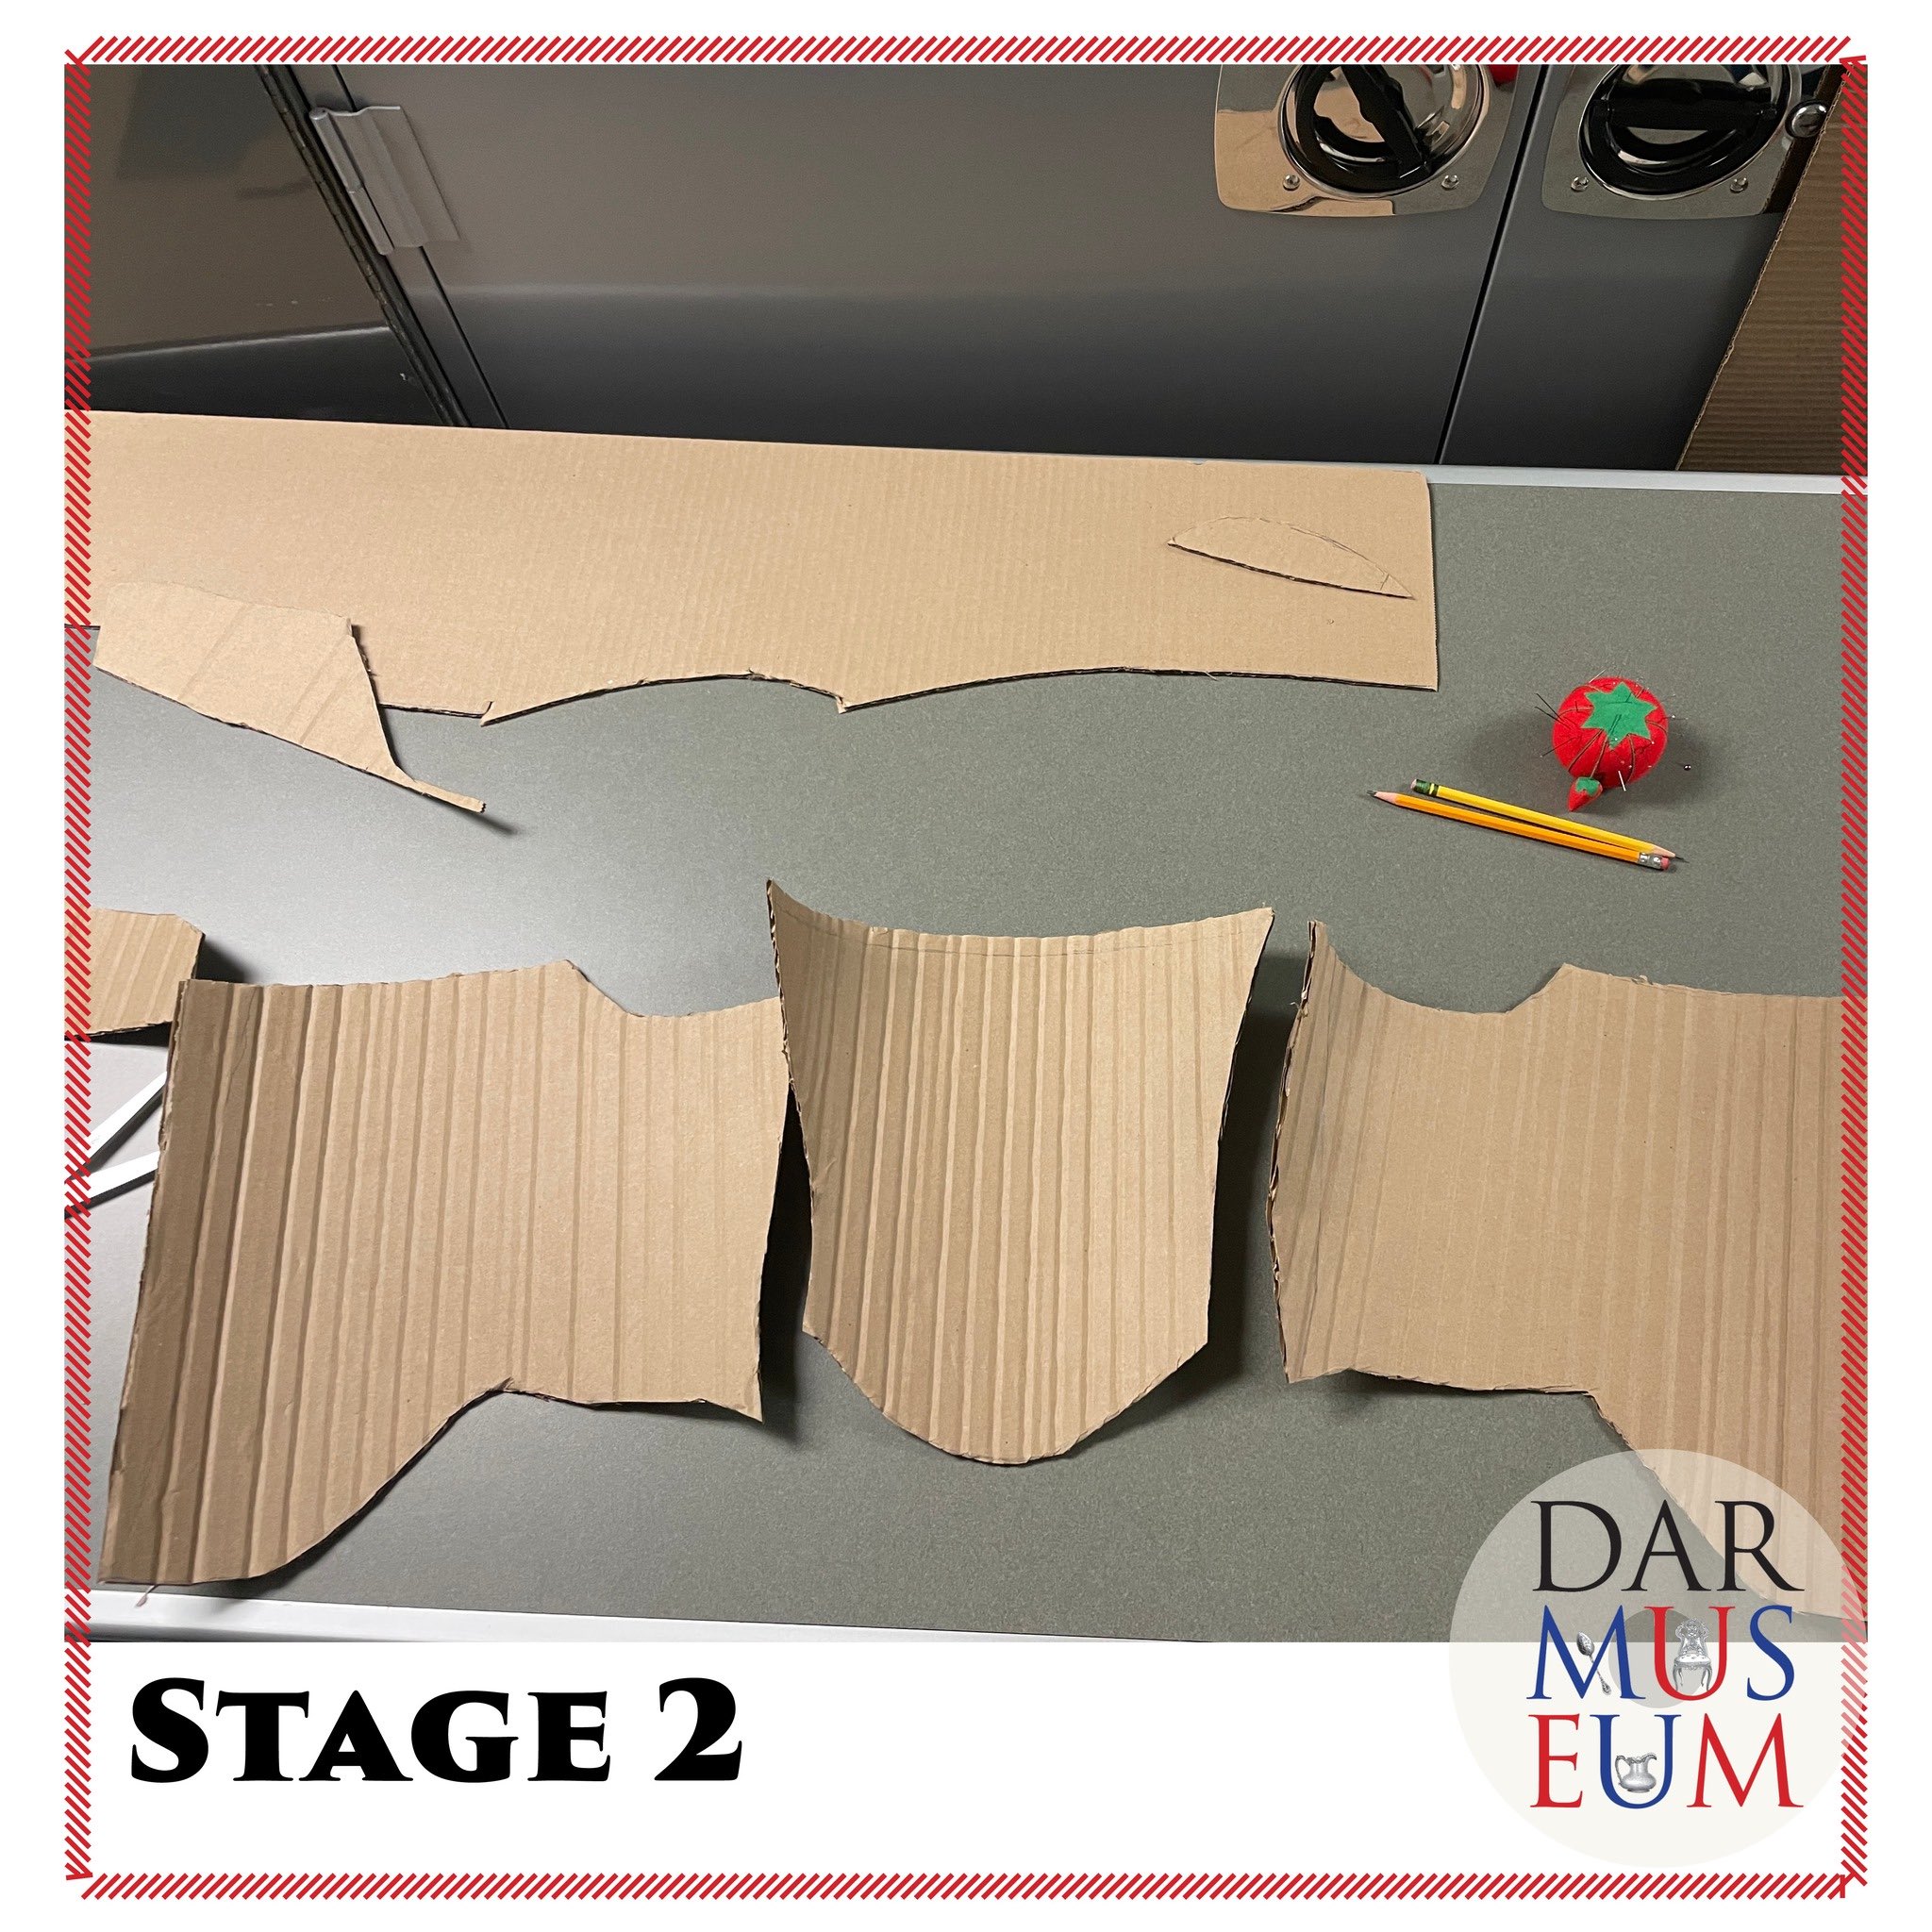 dar-museum-mannequin-dressing-stage-2.jpg